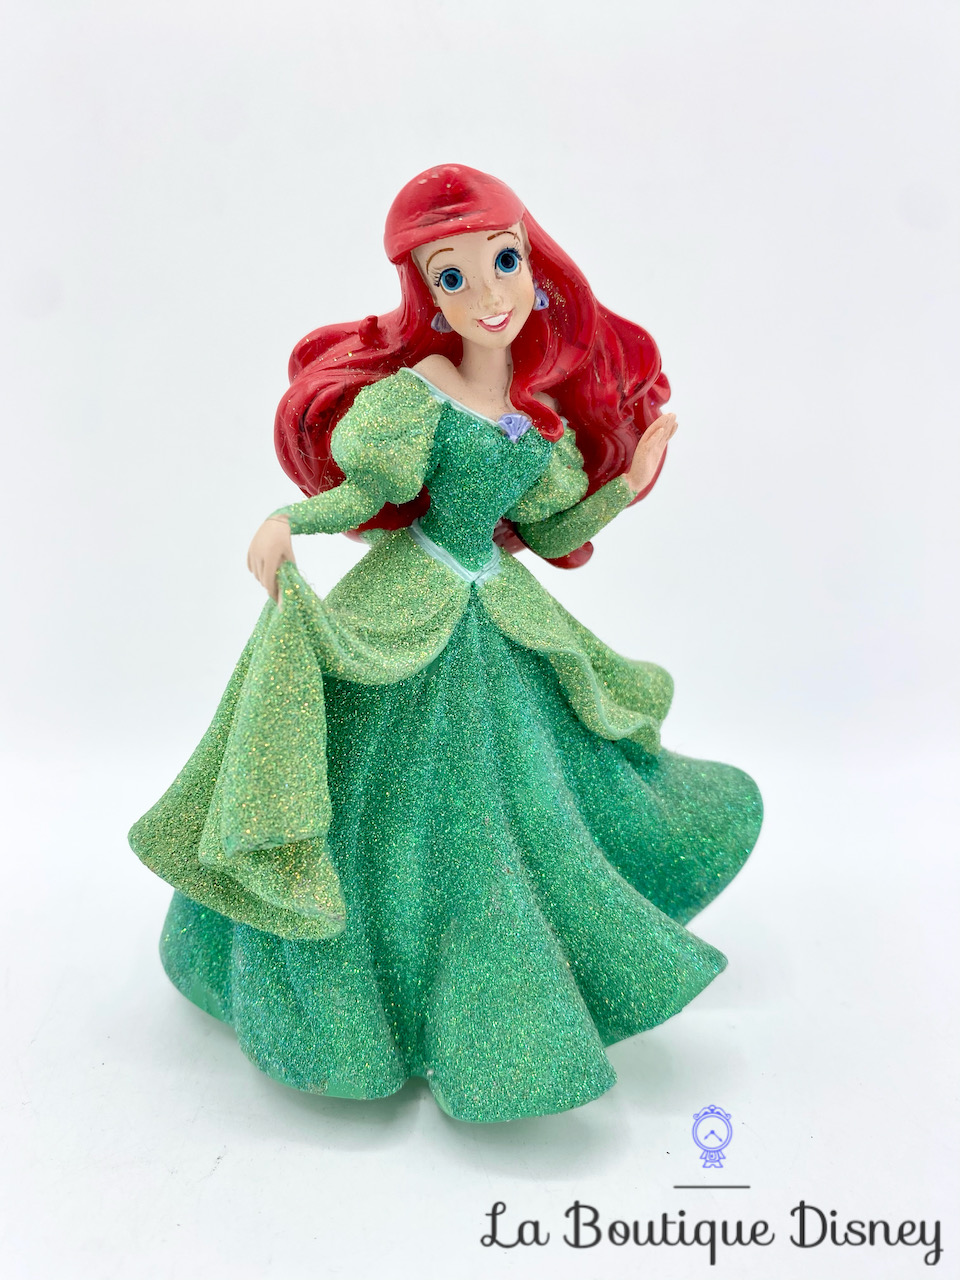 Figurine résine Ariel La petite sirène Disneyland Paris Disney princesse paillettes robe verte 12 cm